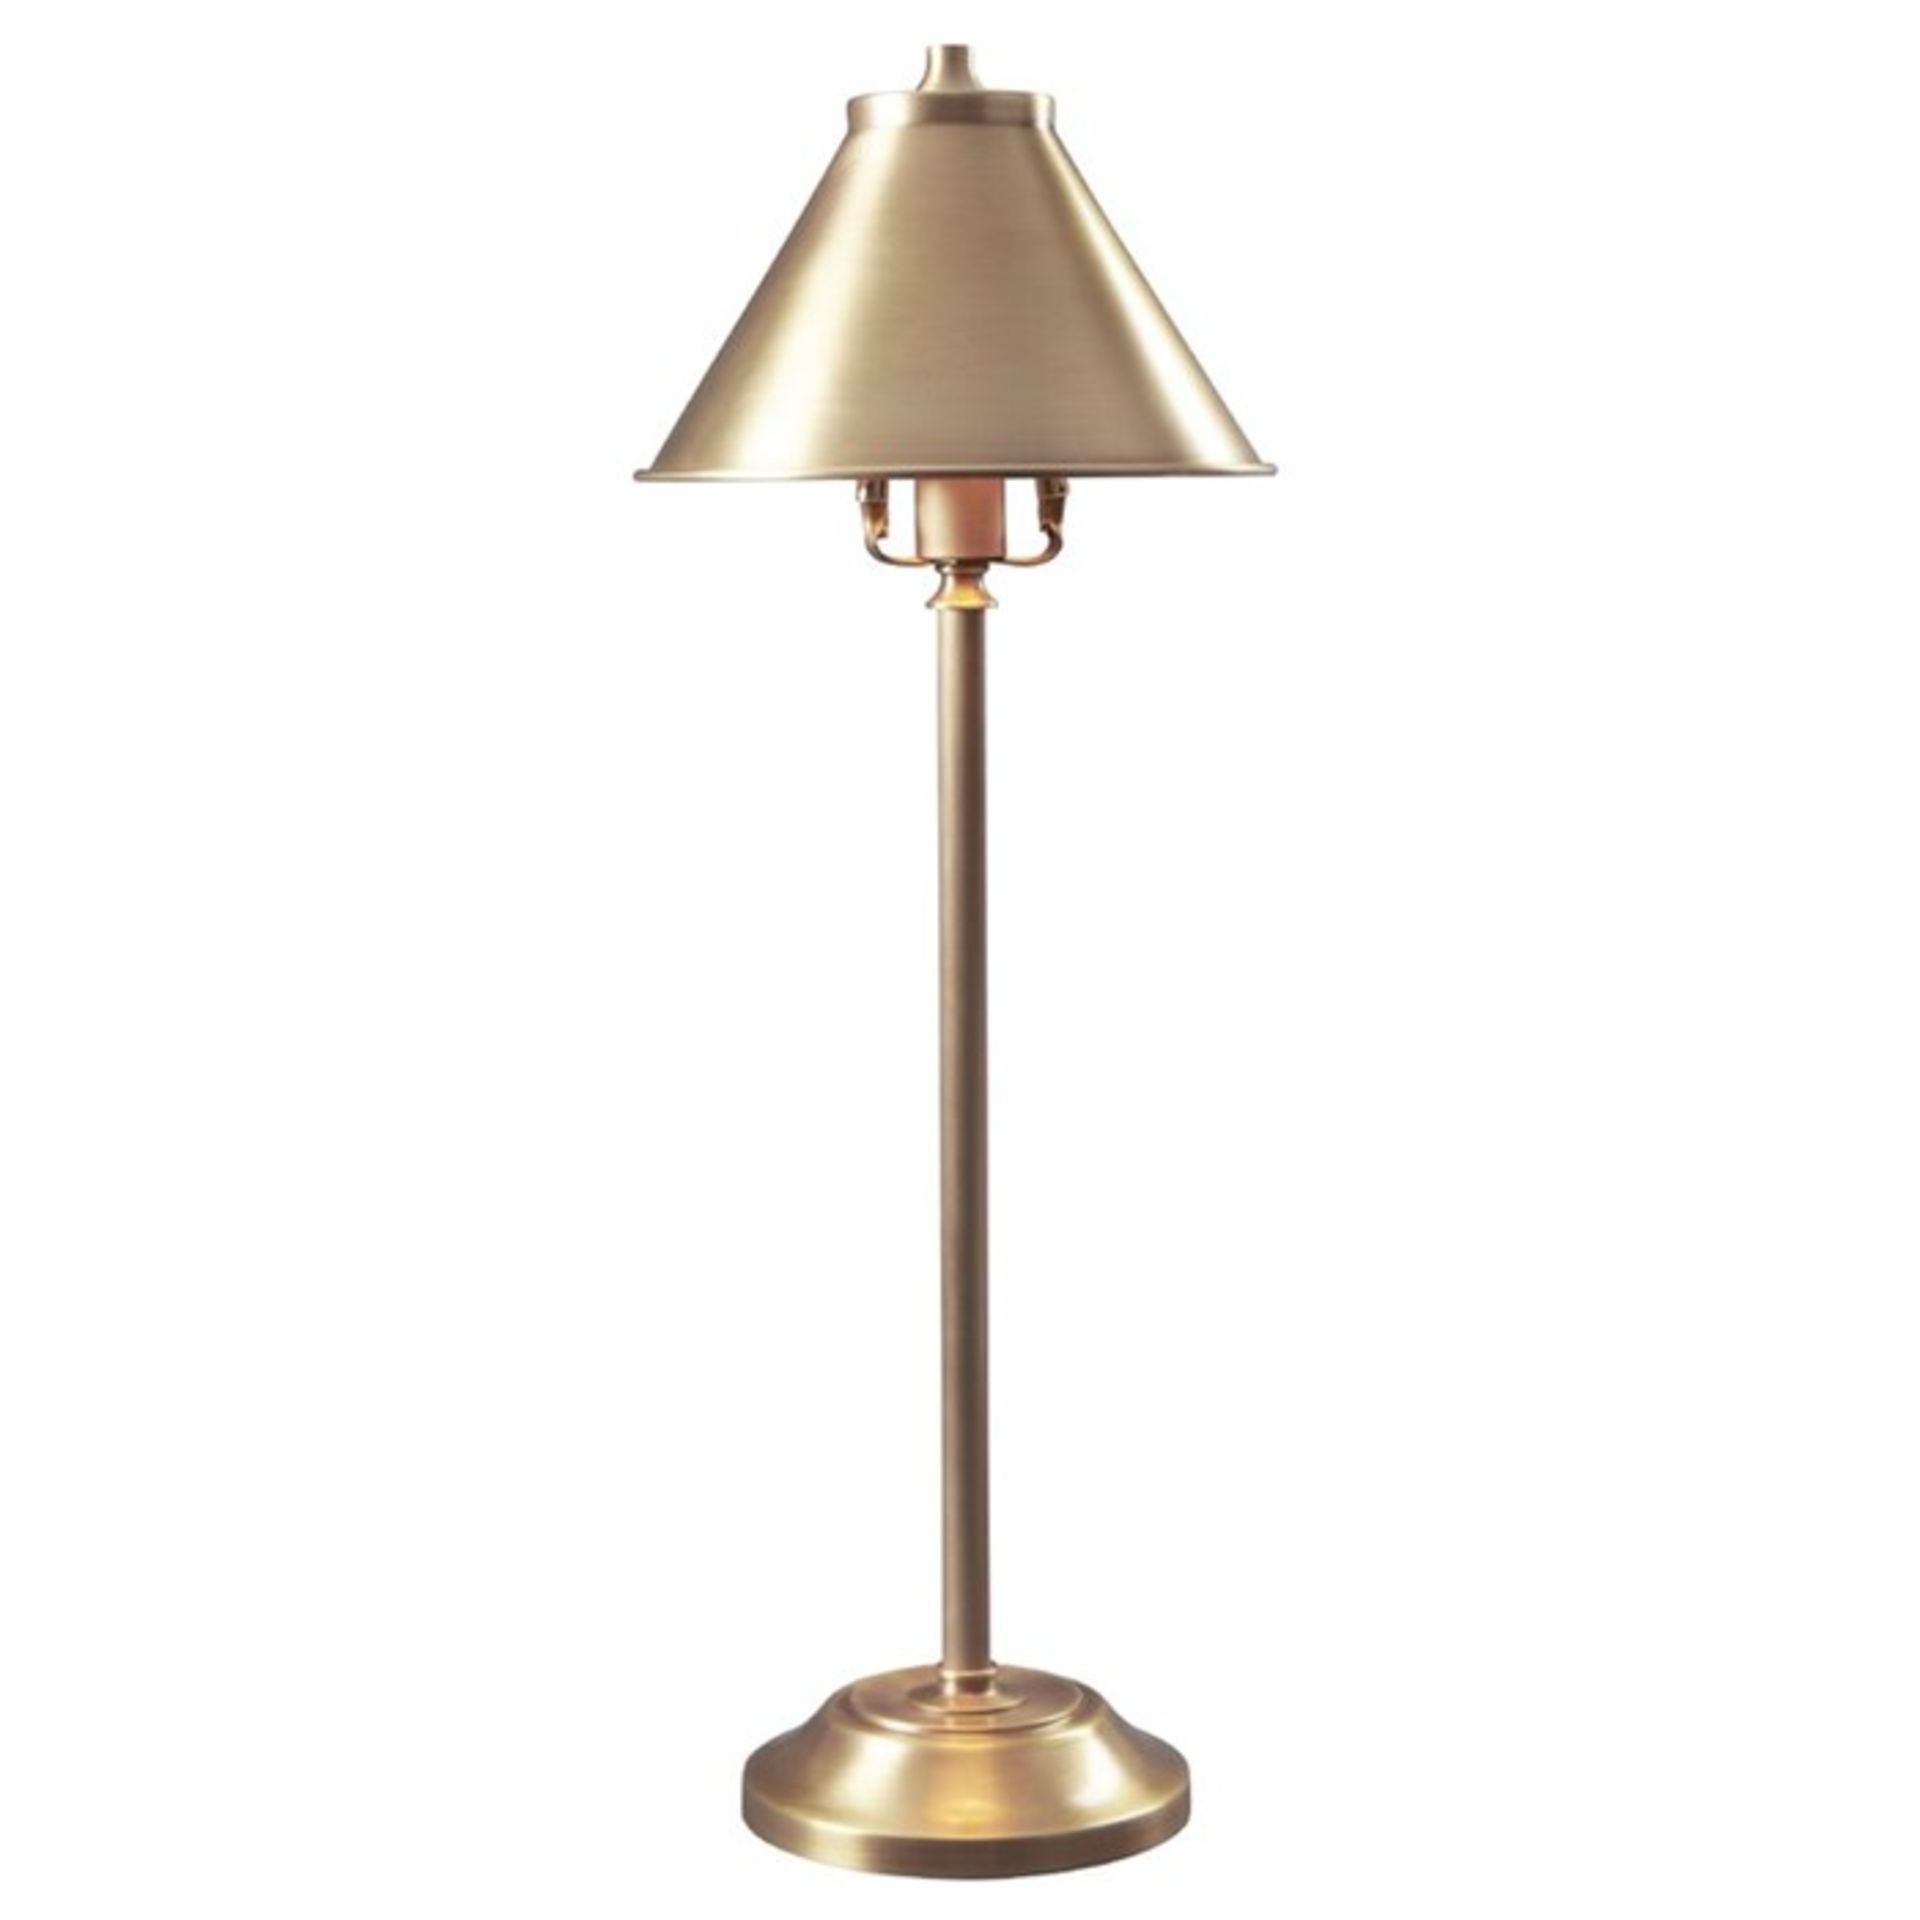 Longshore Tides,Evie 60cm Table Lamp (AGED BRASS) RRP £105.99 (ULL3251 - 17512/26) 2E